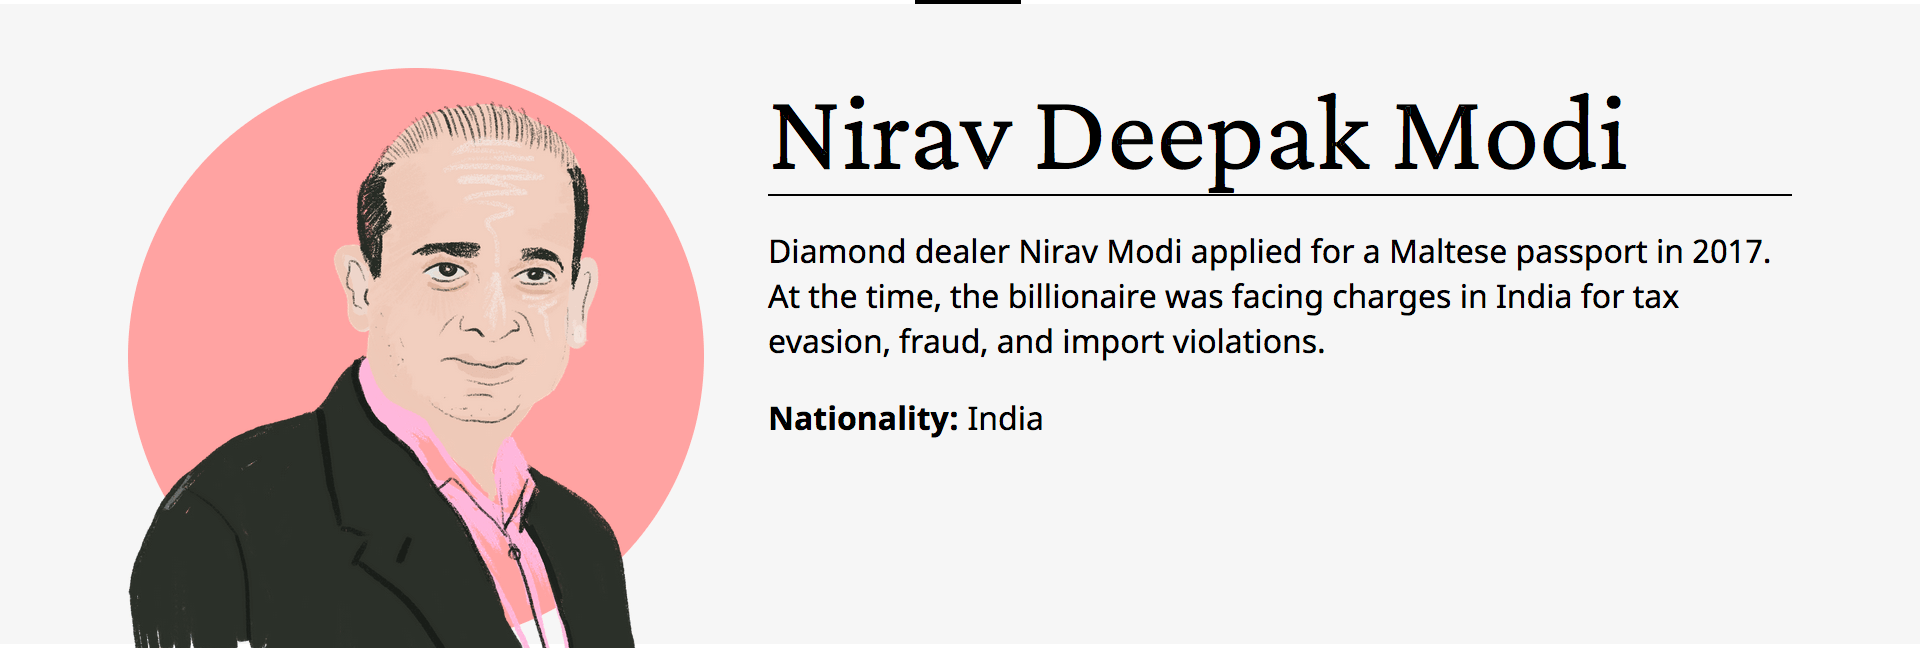 Nirav Deepak Modi